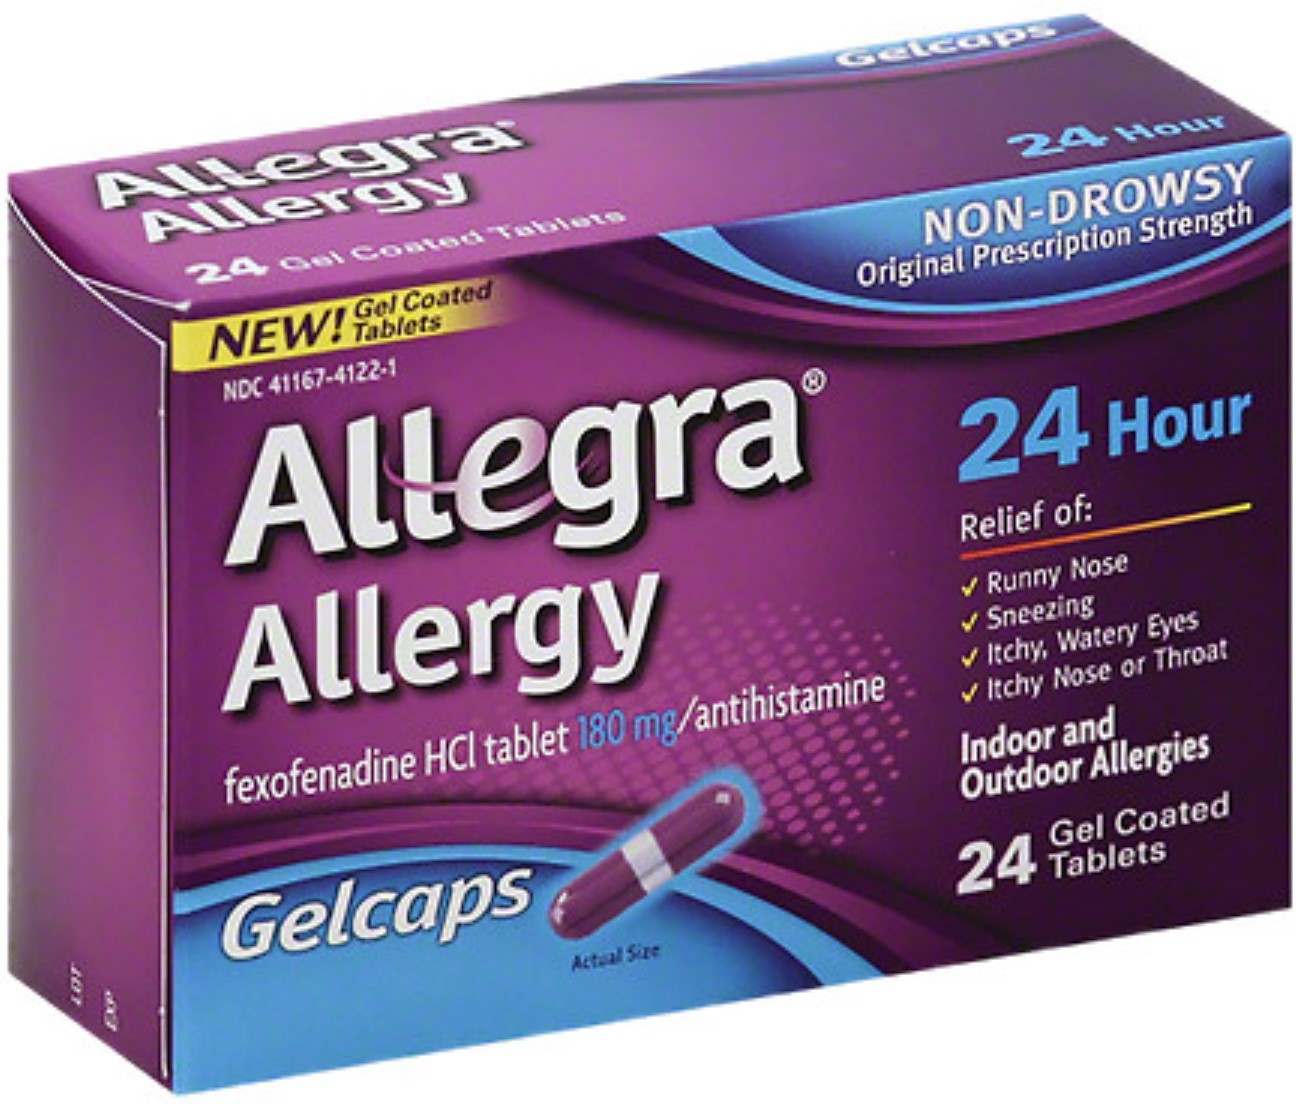 Allegra 24 Hour Allergy, Gelcaps 24 ea (Pack of 3) - image 1 of 1